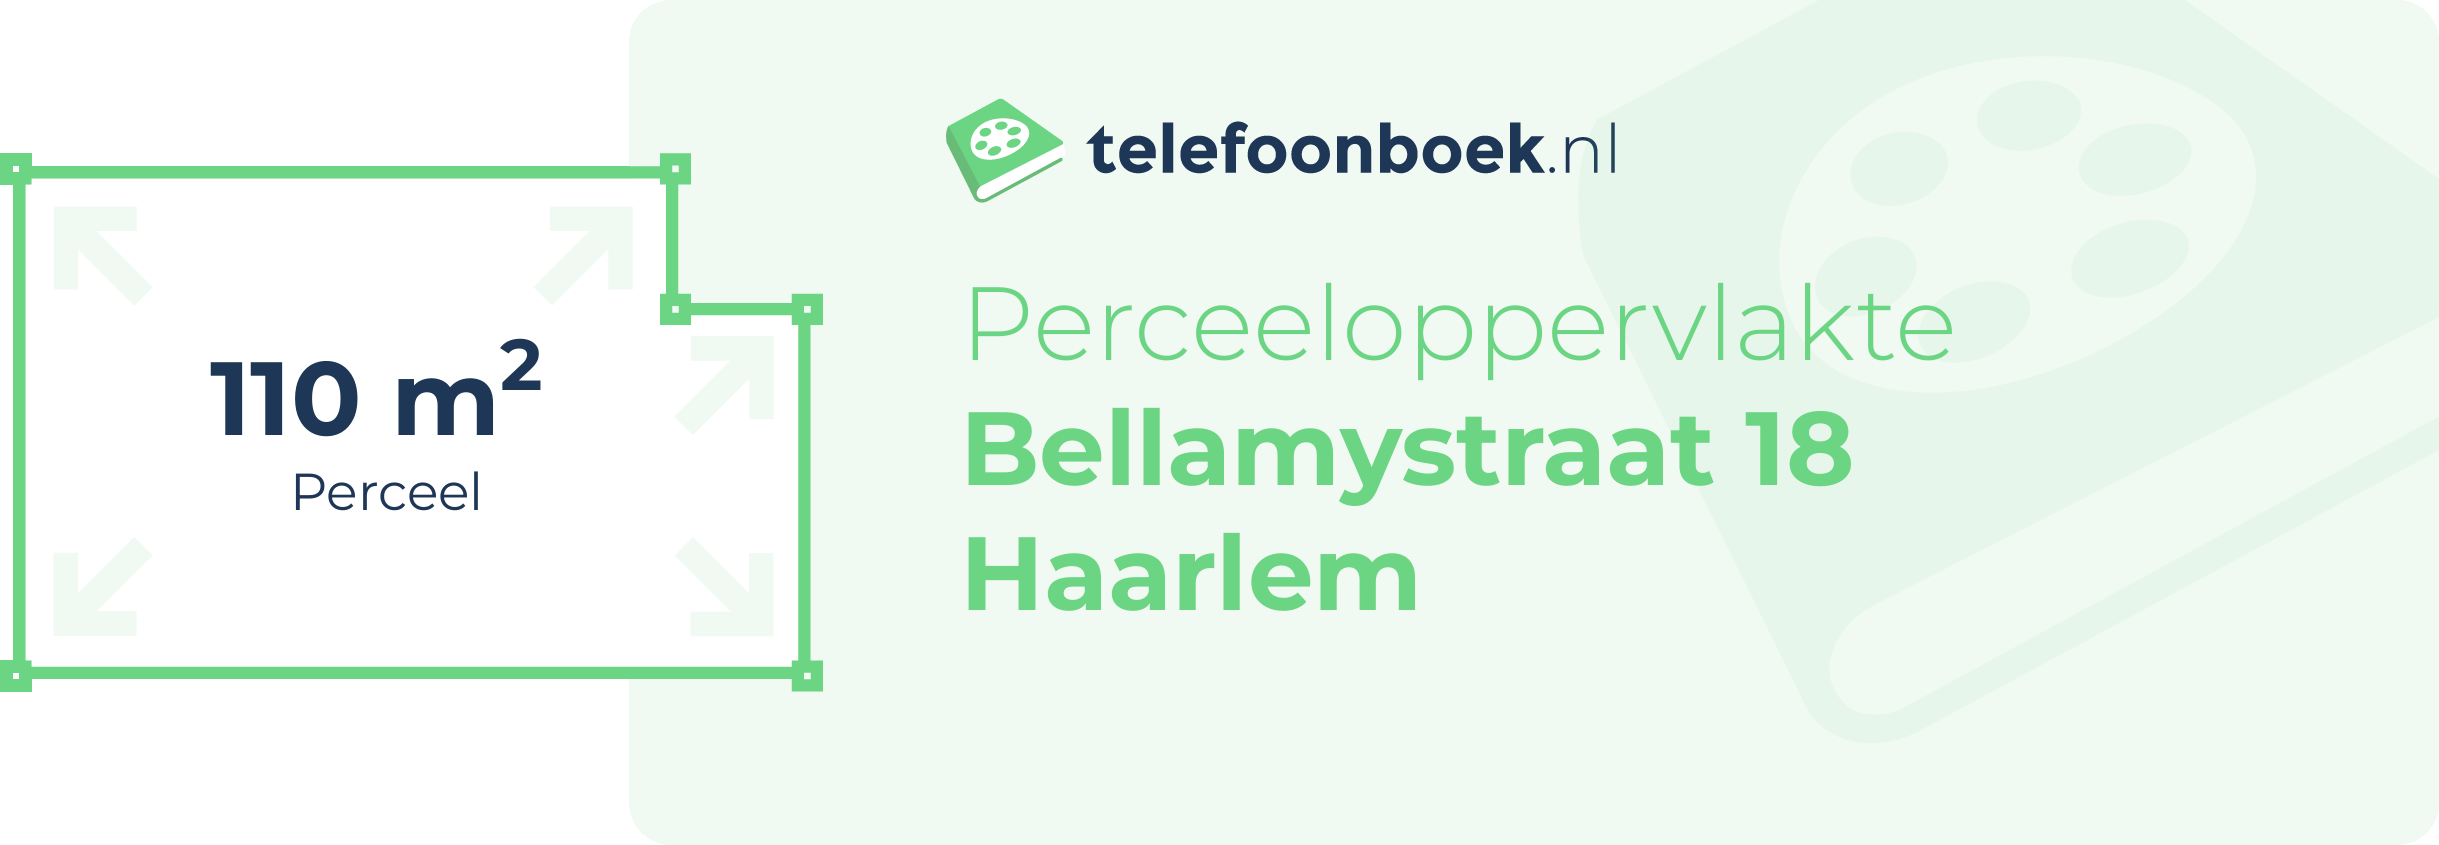 Perceeloppervlakte Bellamystraat 18 Haarlem